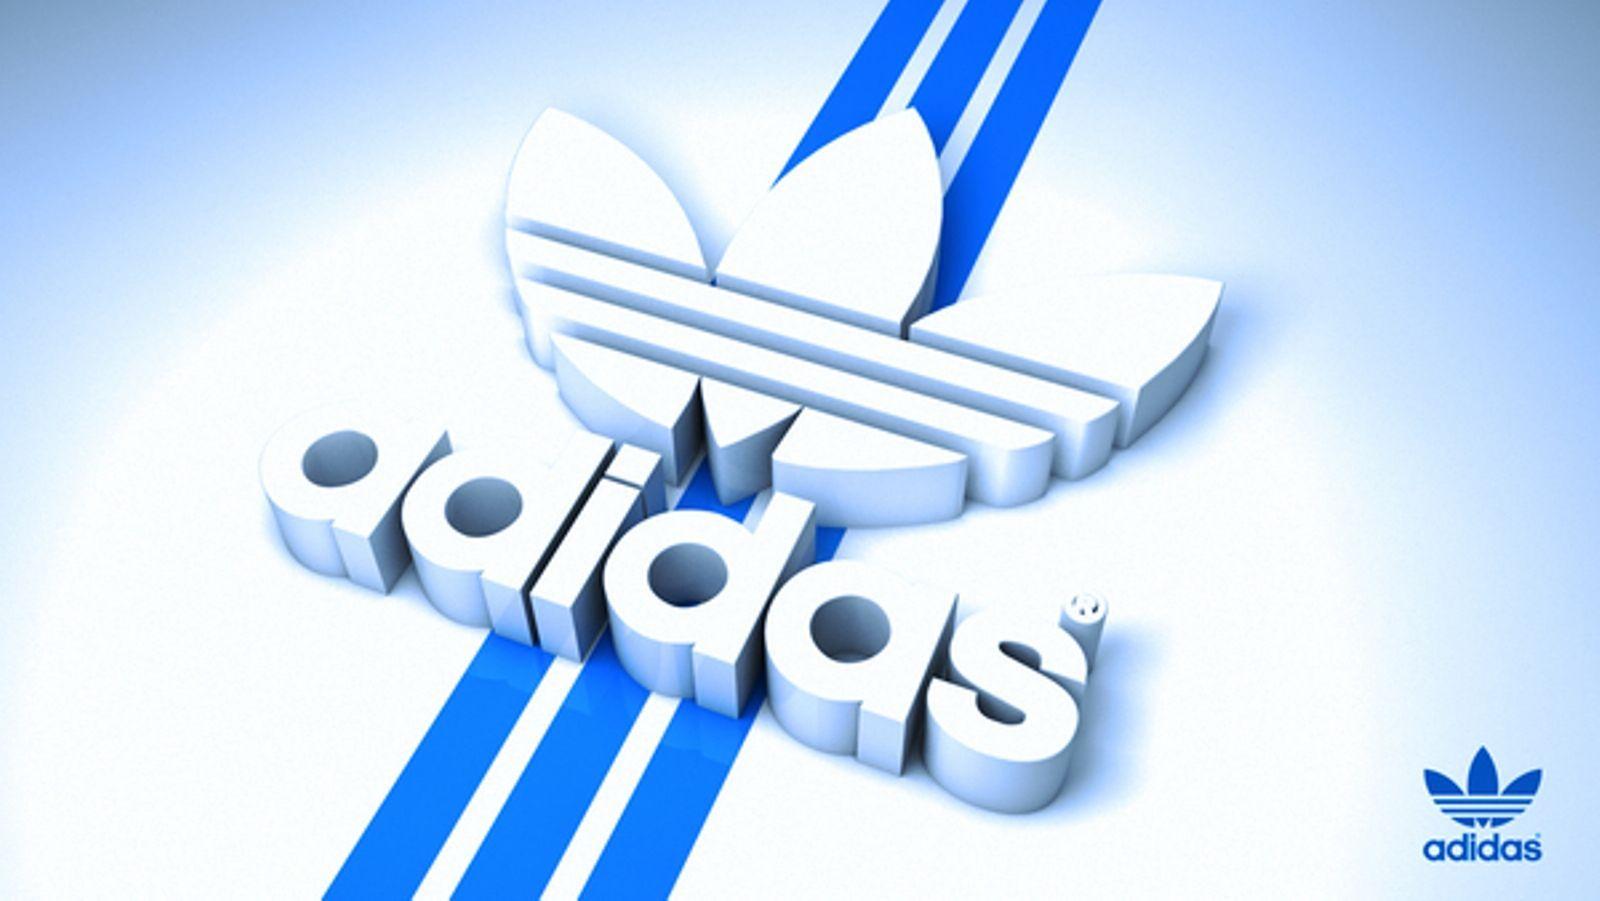 Adidas Originals Logo Wallpapers Top Free Adidas Originals Logo Backgrounds Wallpaperaccess